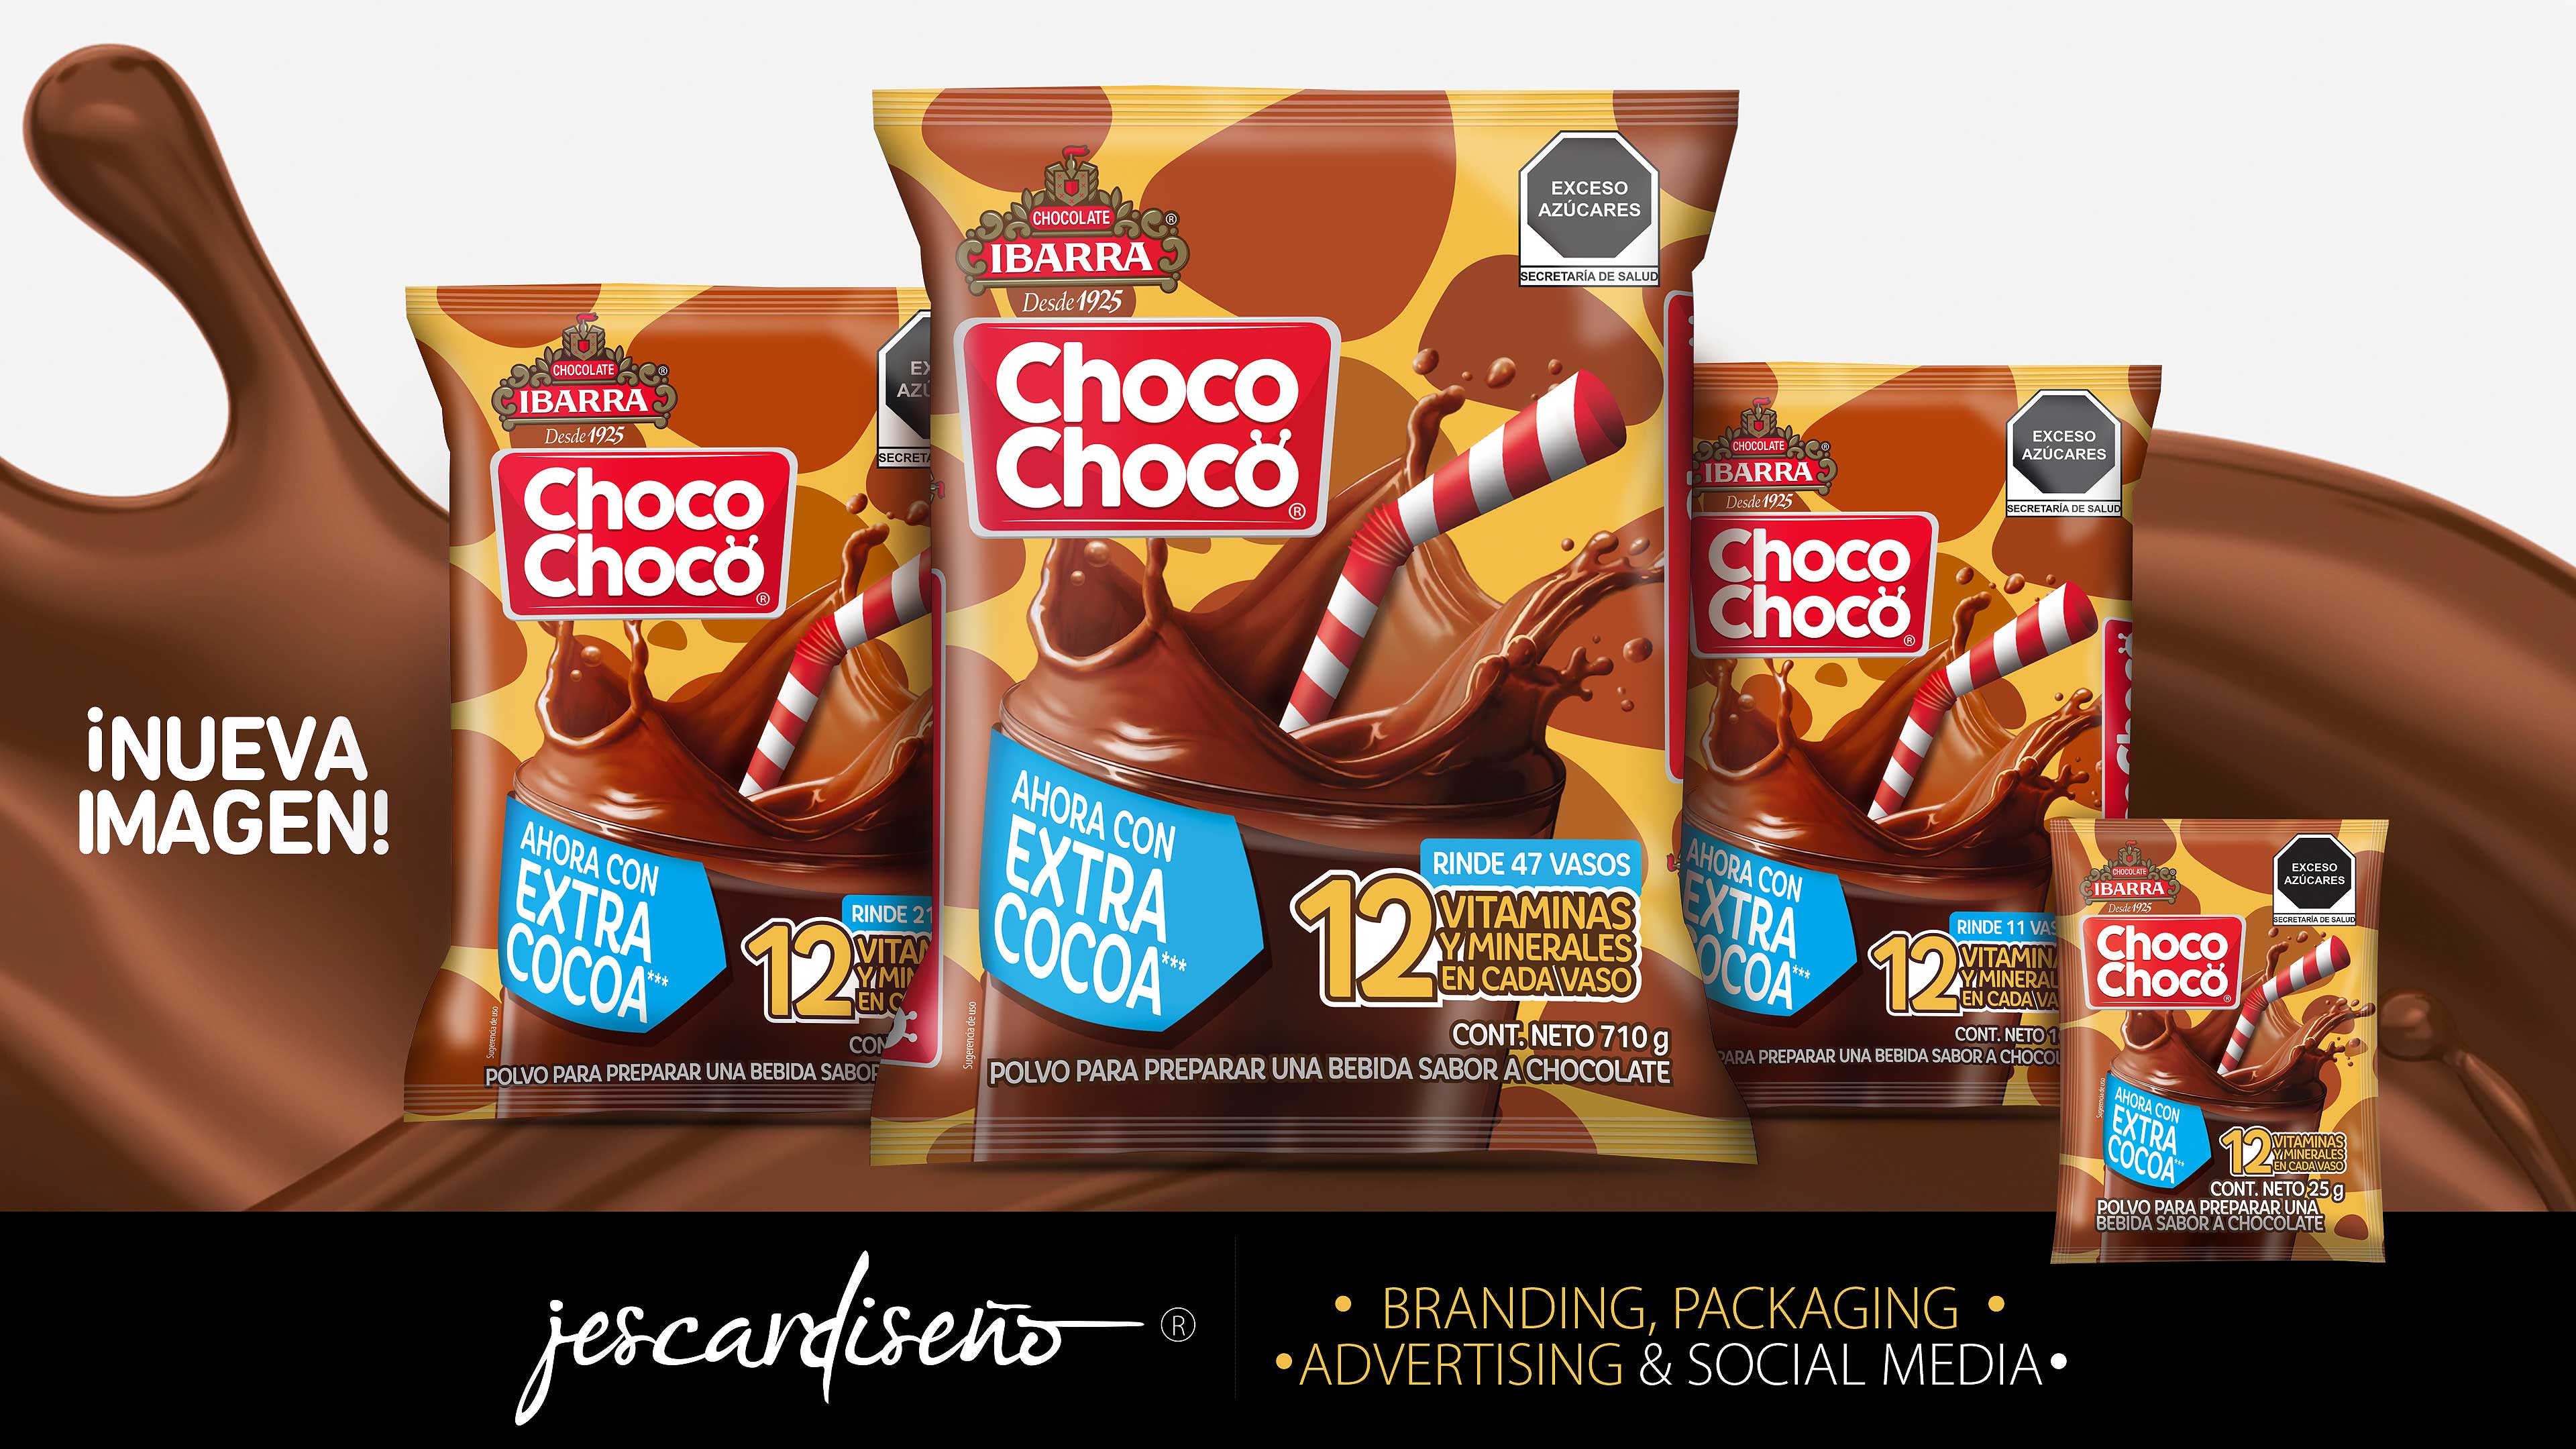 aaibarra chocochoco packaging 2021 branding jescardiseno portafolio v4